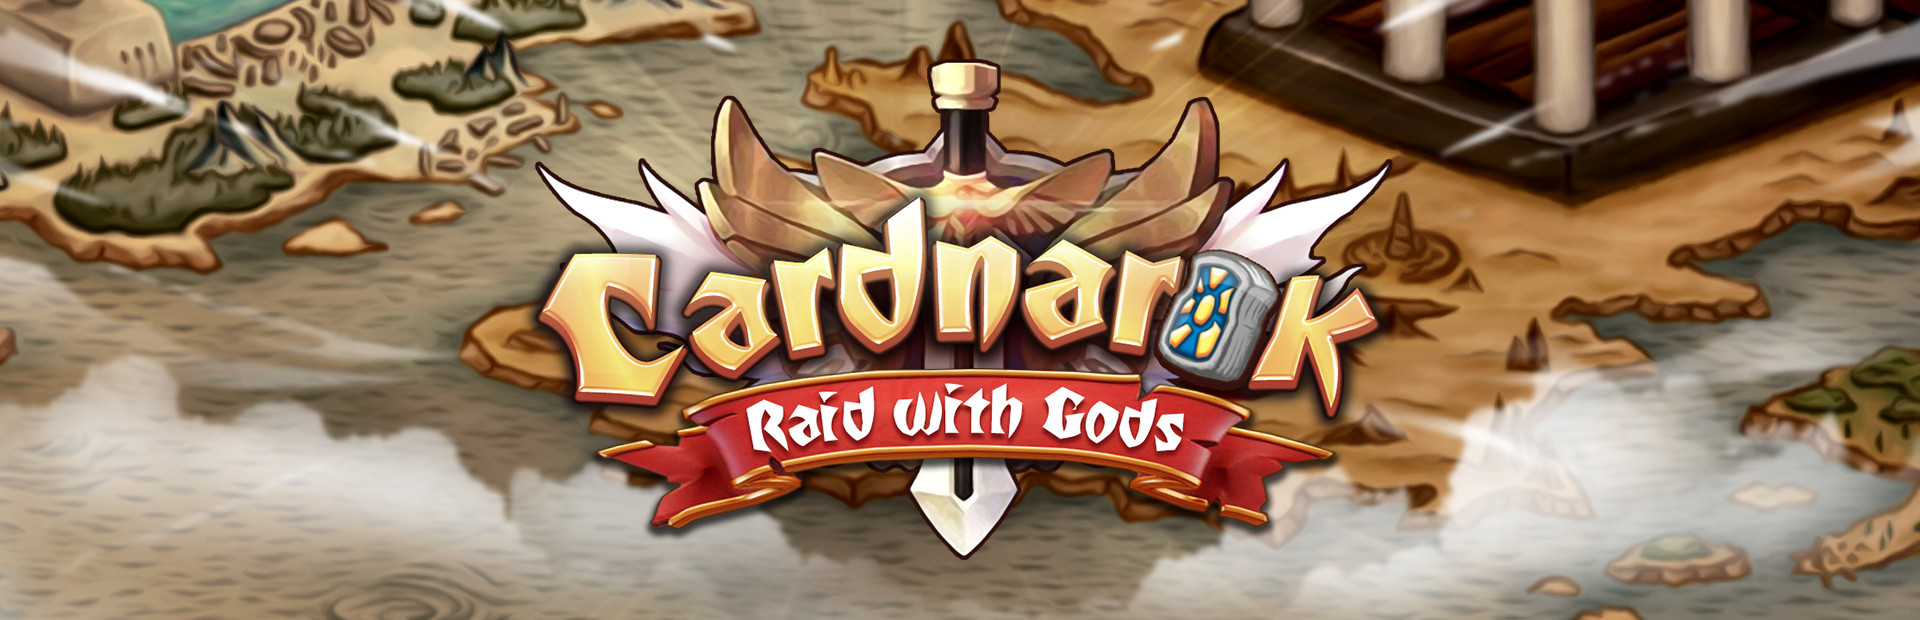 Cardnarok: Raid with Gods cover image